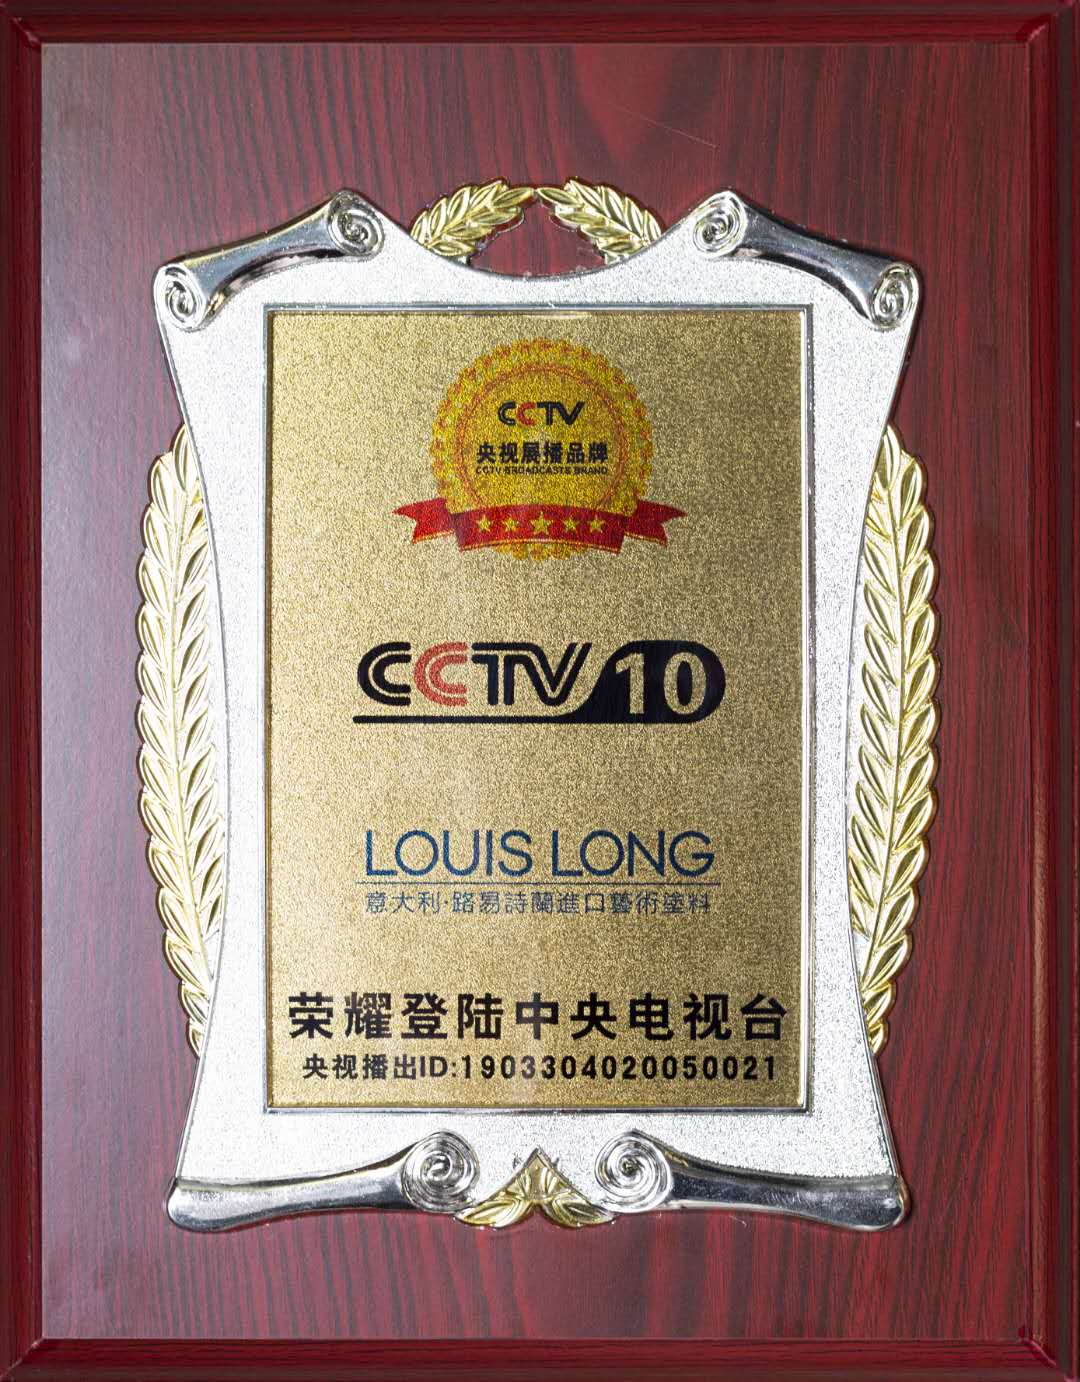 CCTV10意大利路易诗兰进口艺术涂料央视广告宣传片